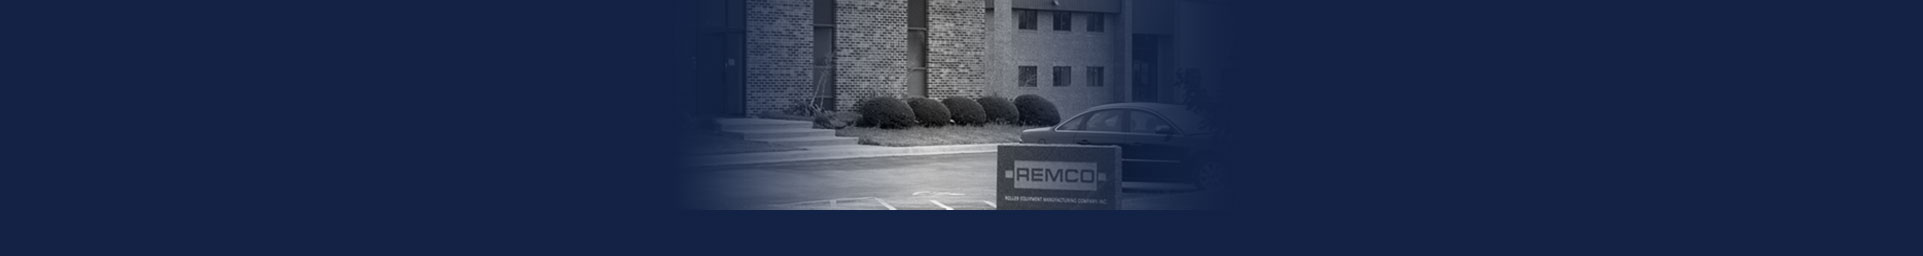 REMCO headquarters building